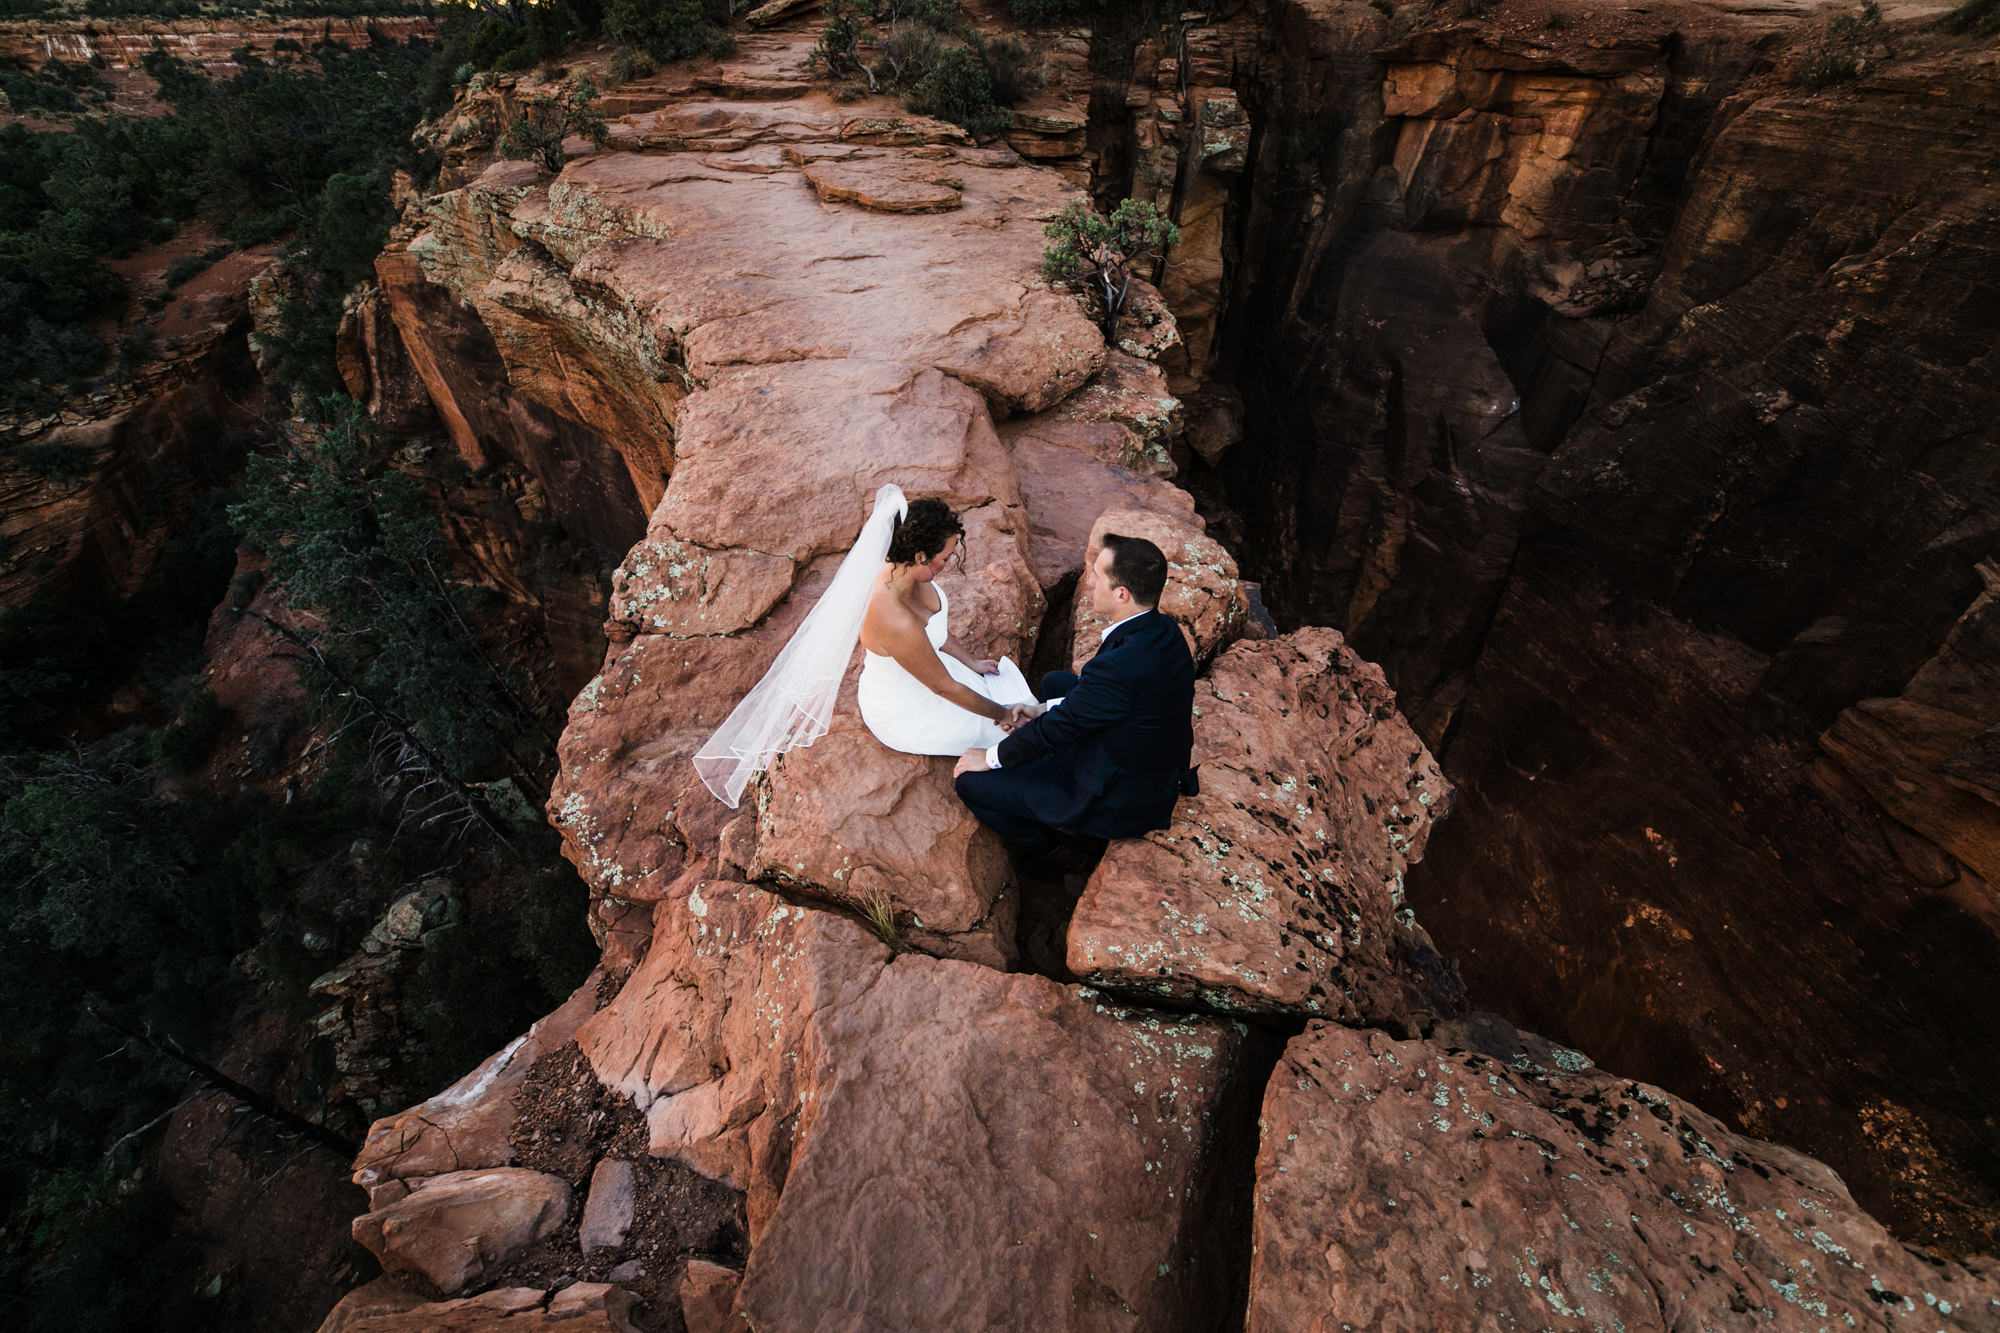 adventure elopement in sedona, arizona | travel destination wedding photographers | the hearnes adventure photography | www.thehearnes.com